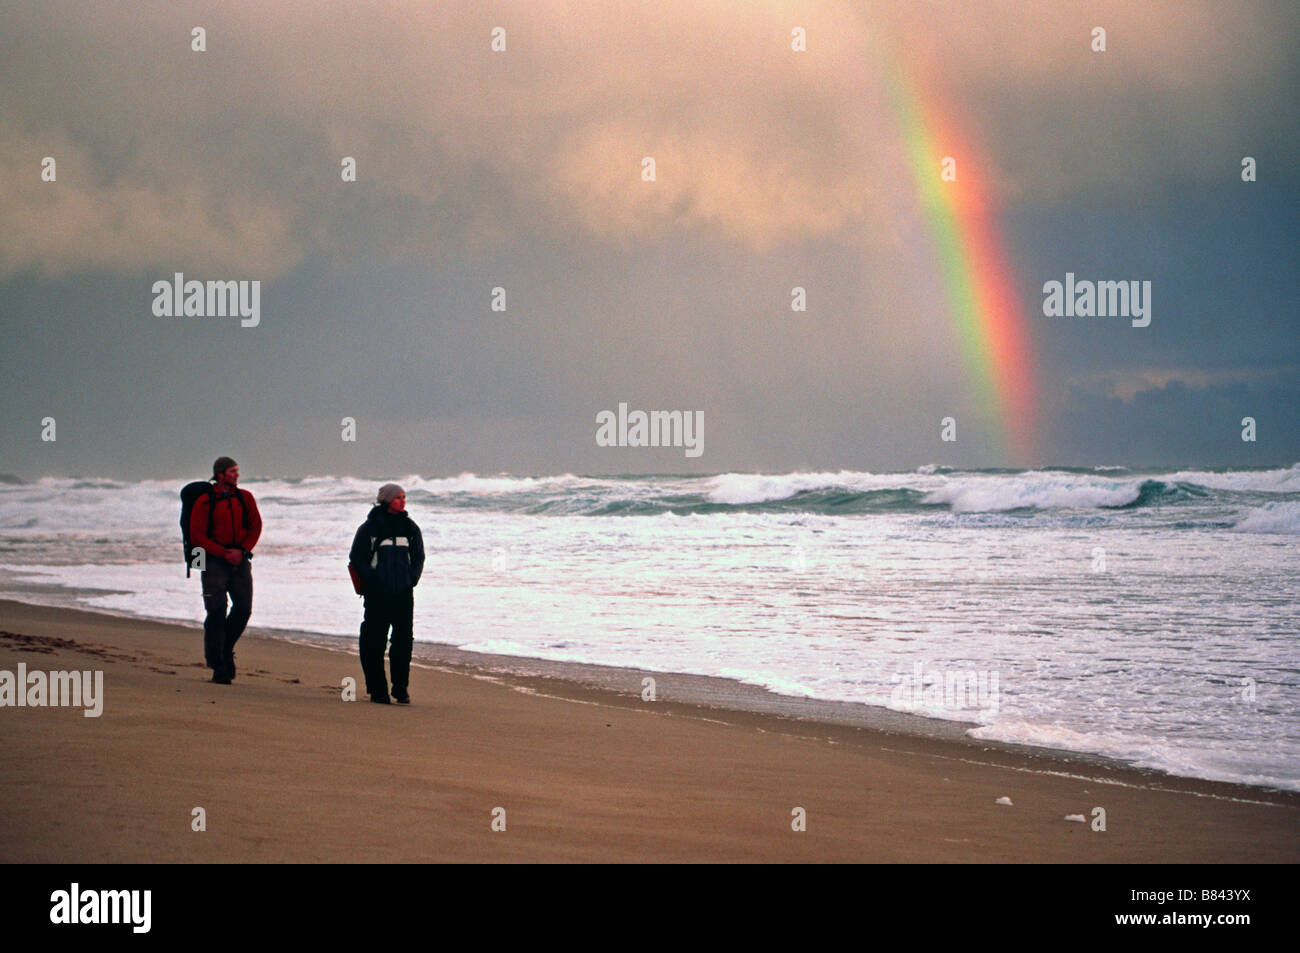 A couple hikes on a stormy day on Johanna Beach, Great Ocean Walk, Victoria, Australia Stock Photo